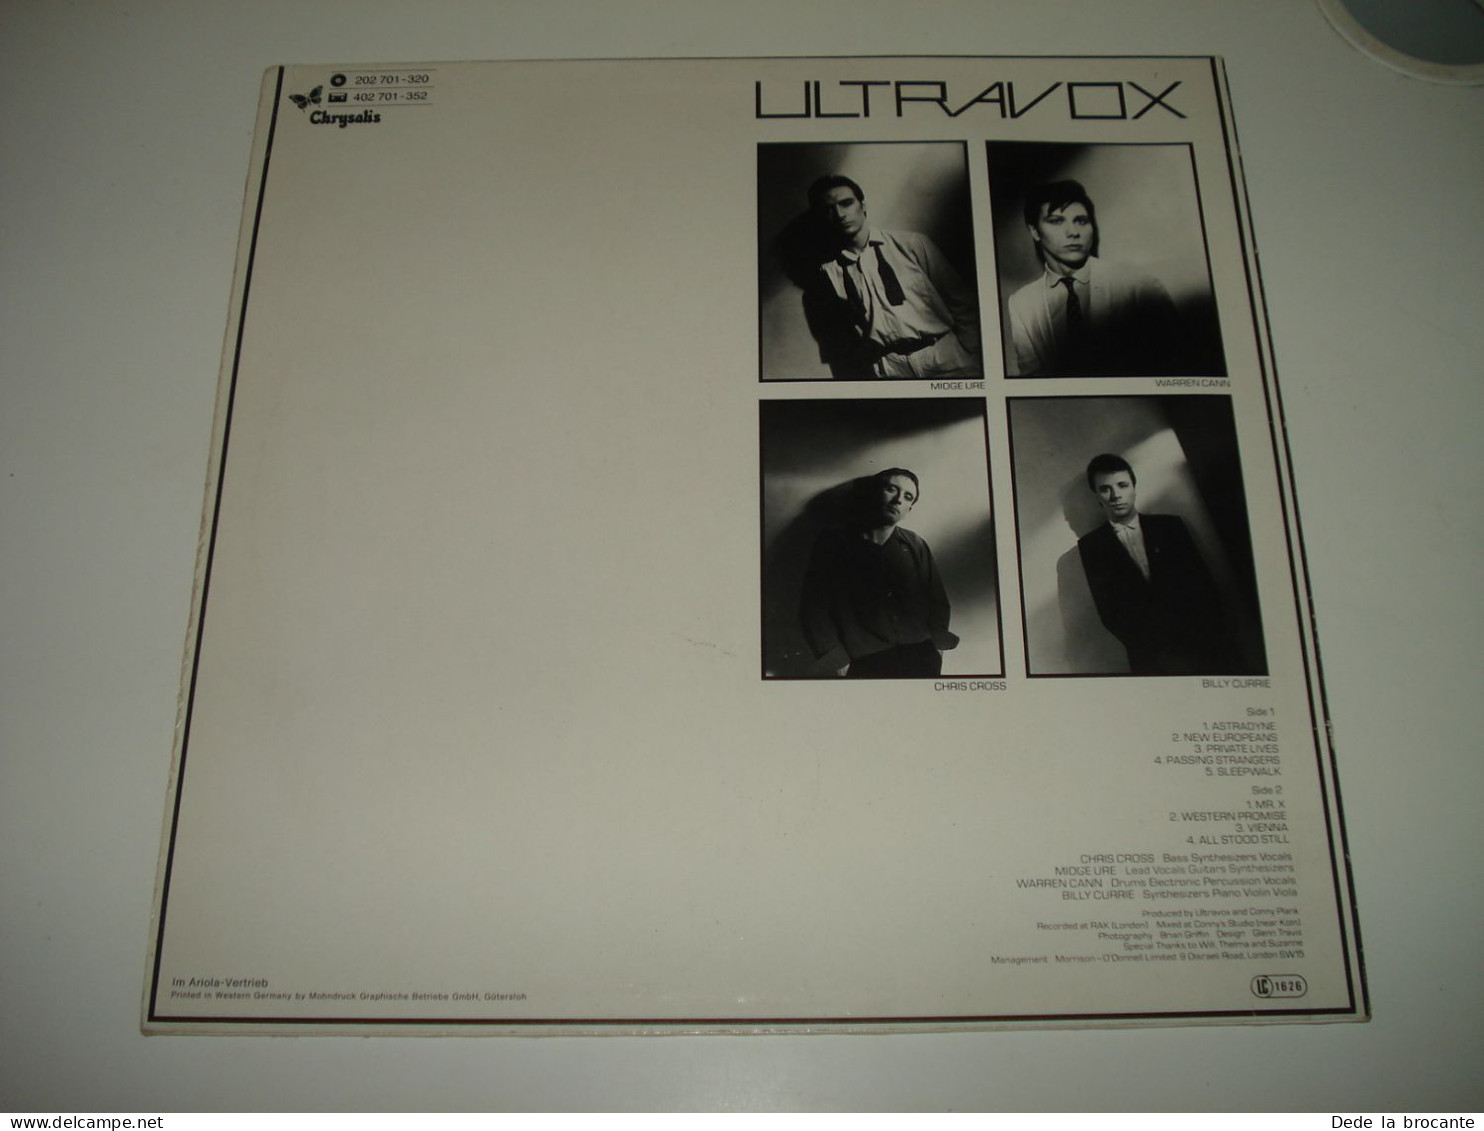 B12 / Ultravox – Vienna – LP - Chrysalis – 202 701-320 - Germany 1980  NM/VG - Nueva Era (New Age)